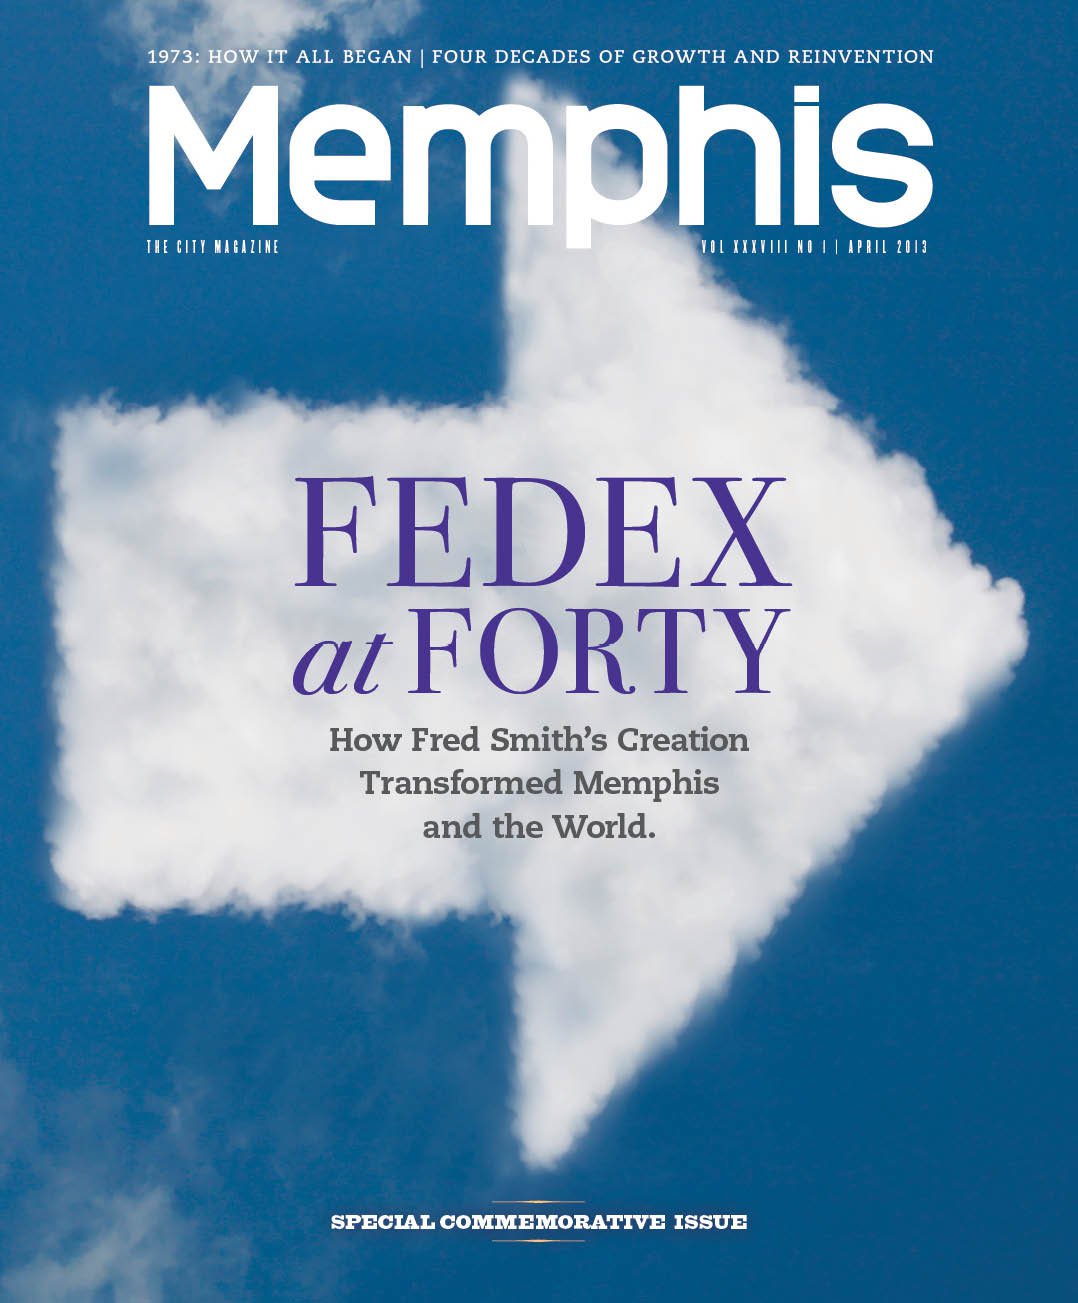 Memphis-based FedEx and Walgreens meet relationship OnSite goal. - Memphis  Business Journal